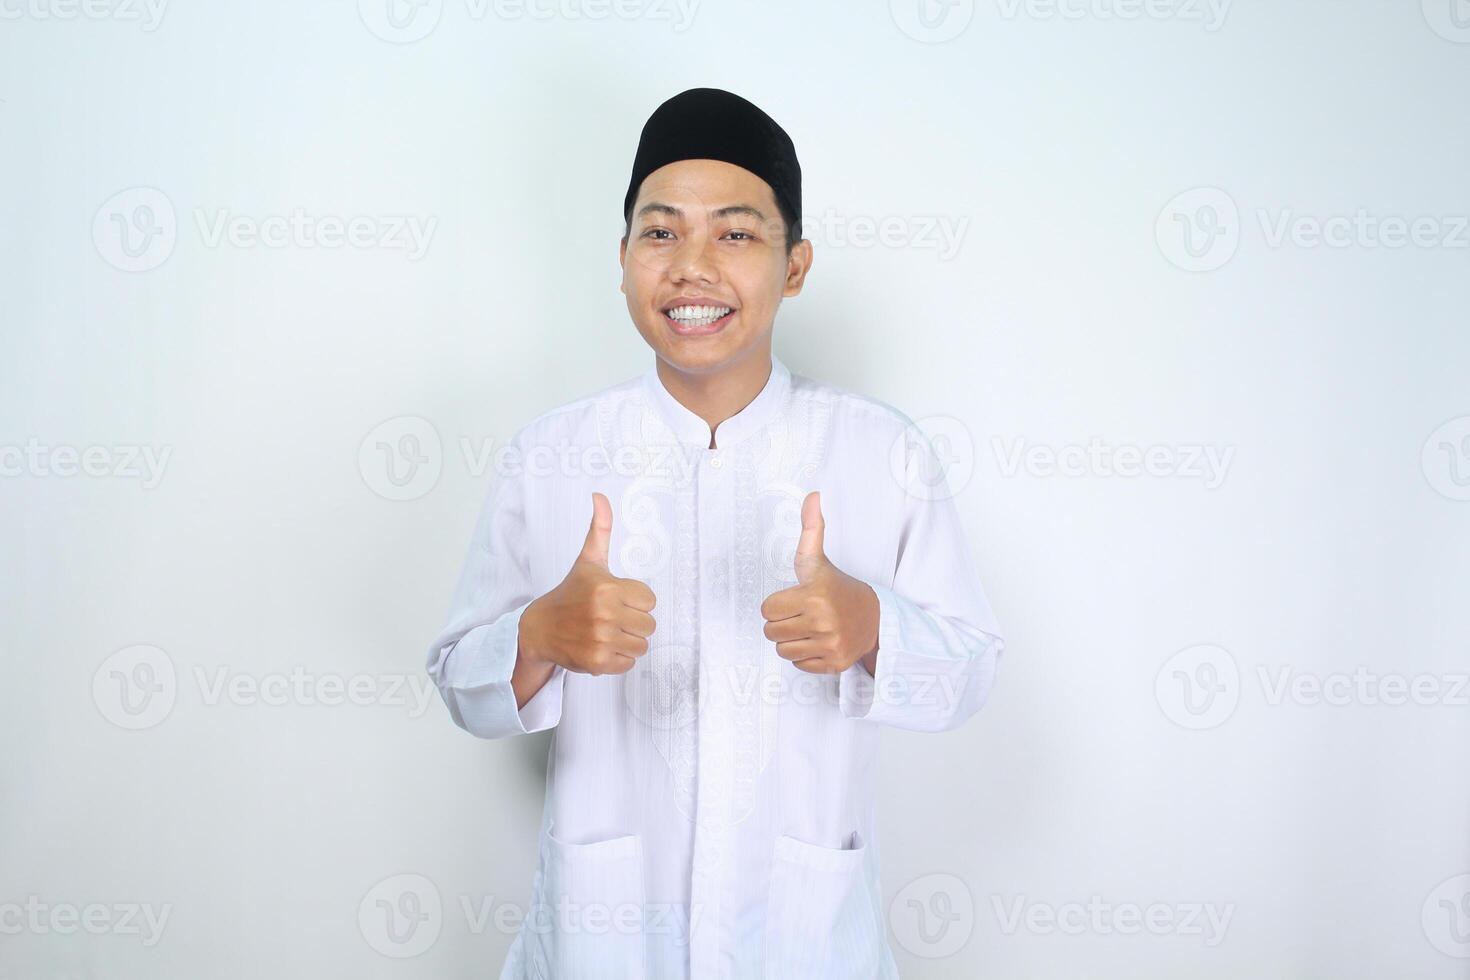 feliz muçulmano ásia homem dando dois polegares acima isolado em branco fundo foto